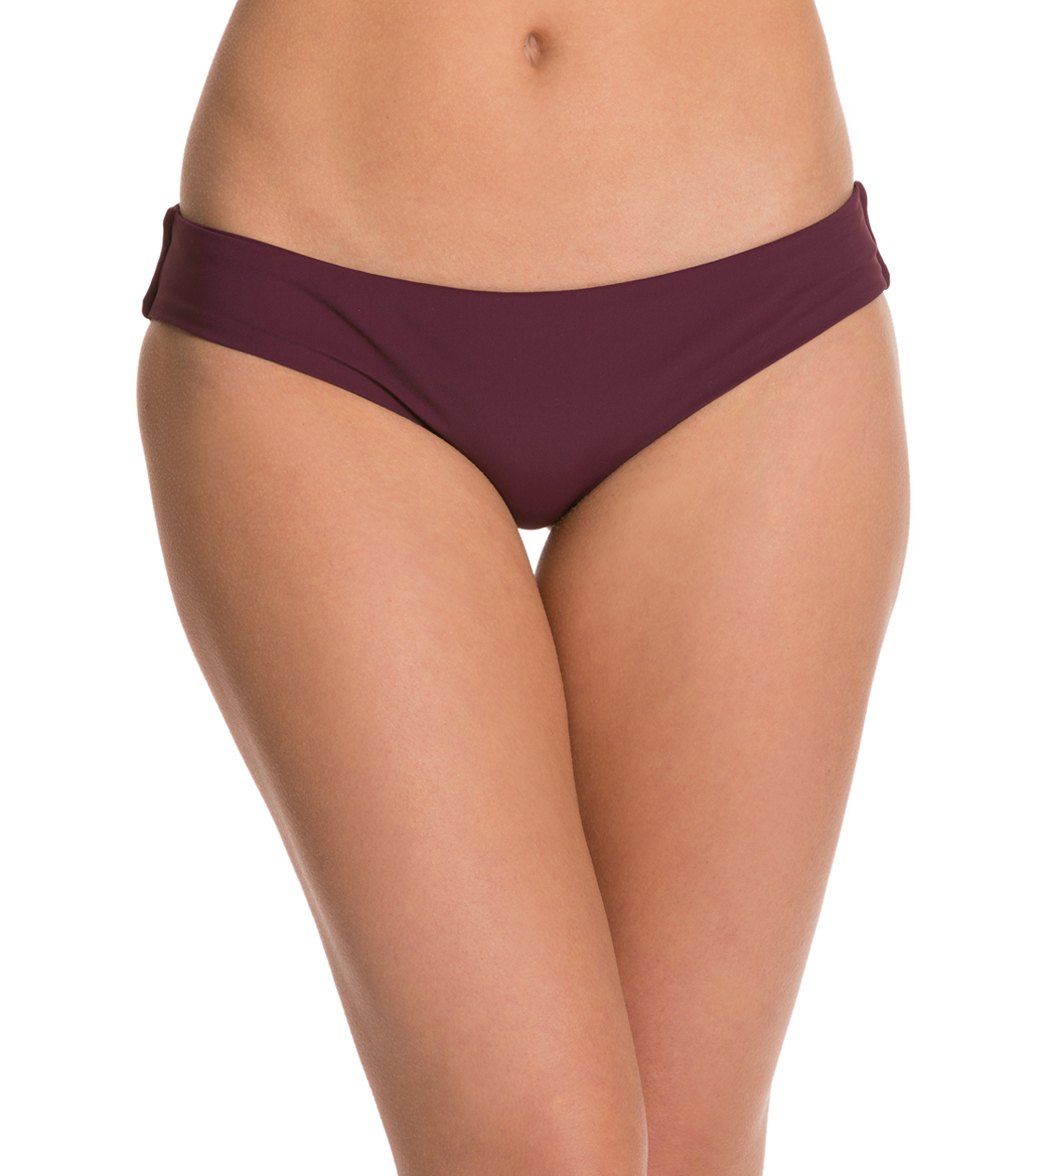 Aerin Rose Bordeaux Low Rise Boy Brief Bikini Bottom - Xs Size X-Small - Swimoutlet.com